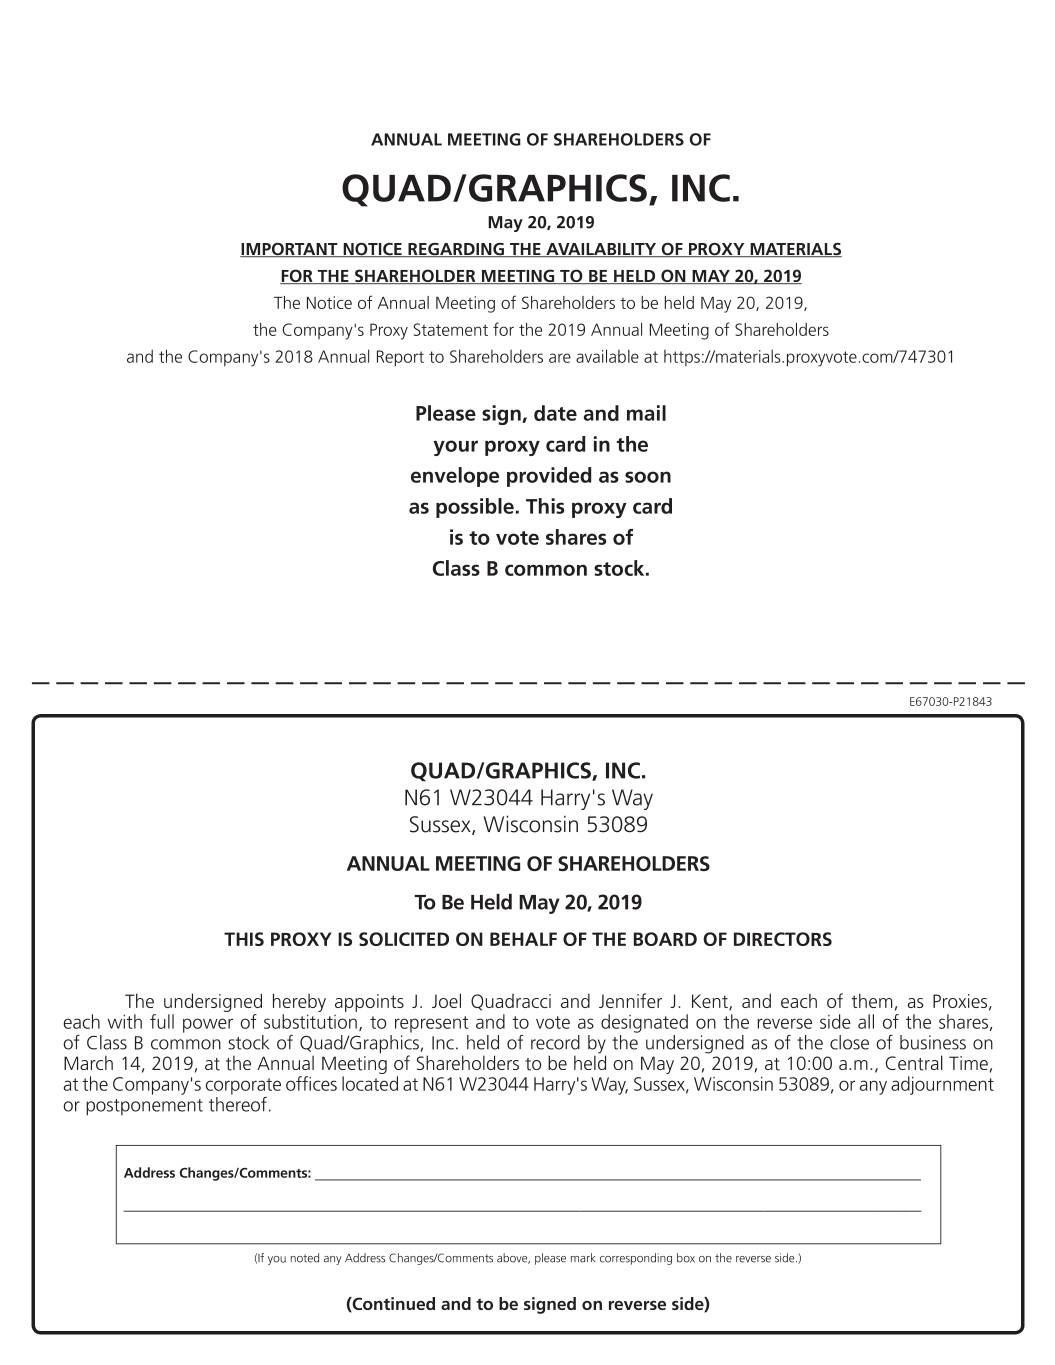 quadclassbproxycard2019back.jpg